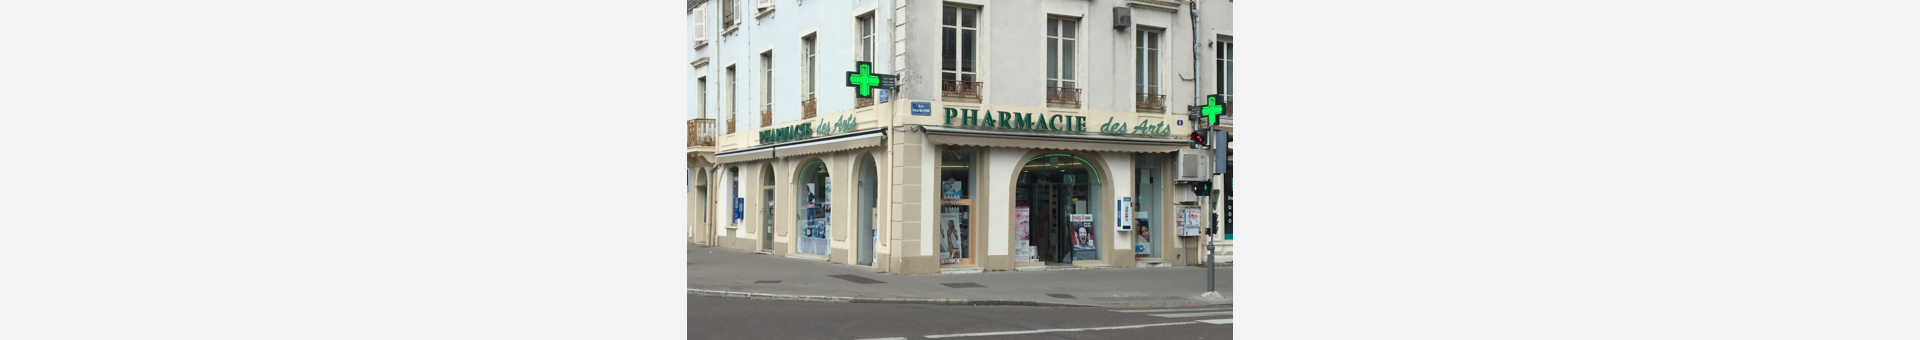 Pharmacie des Arts,CHALON SUR SAÔNE 